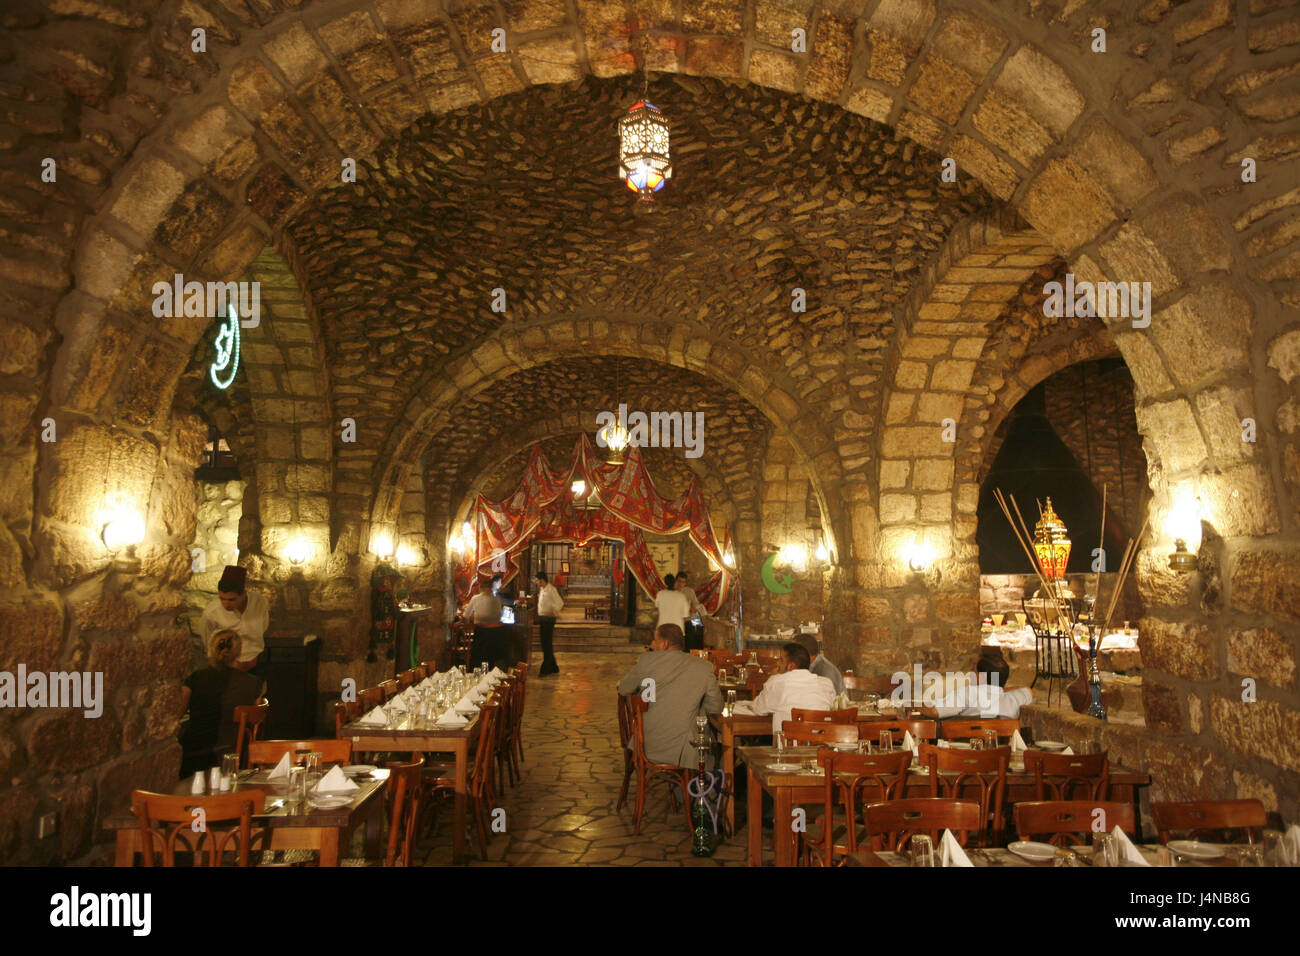 Zuma Restaurant, Dubai :: NoGarlicNoOnions: Restaurant, Food, and Travel  Stories/Reviews - Lebanon